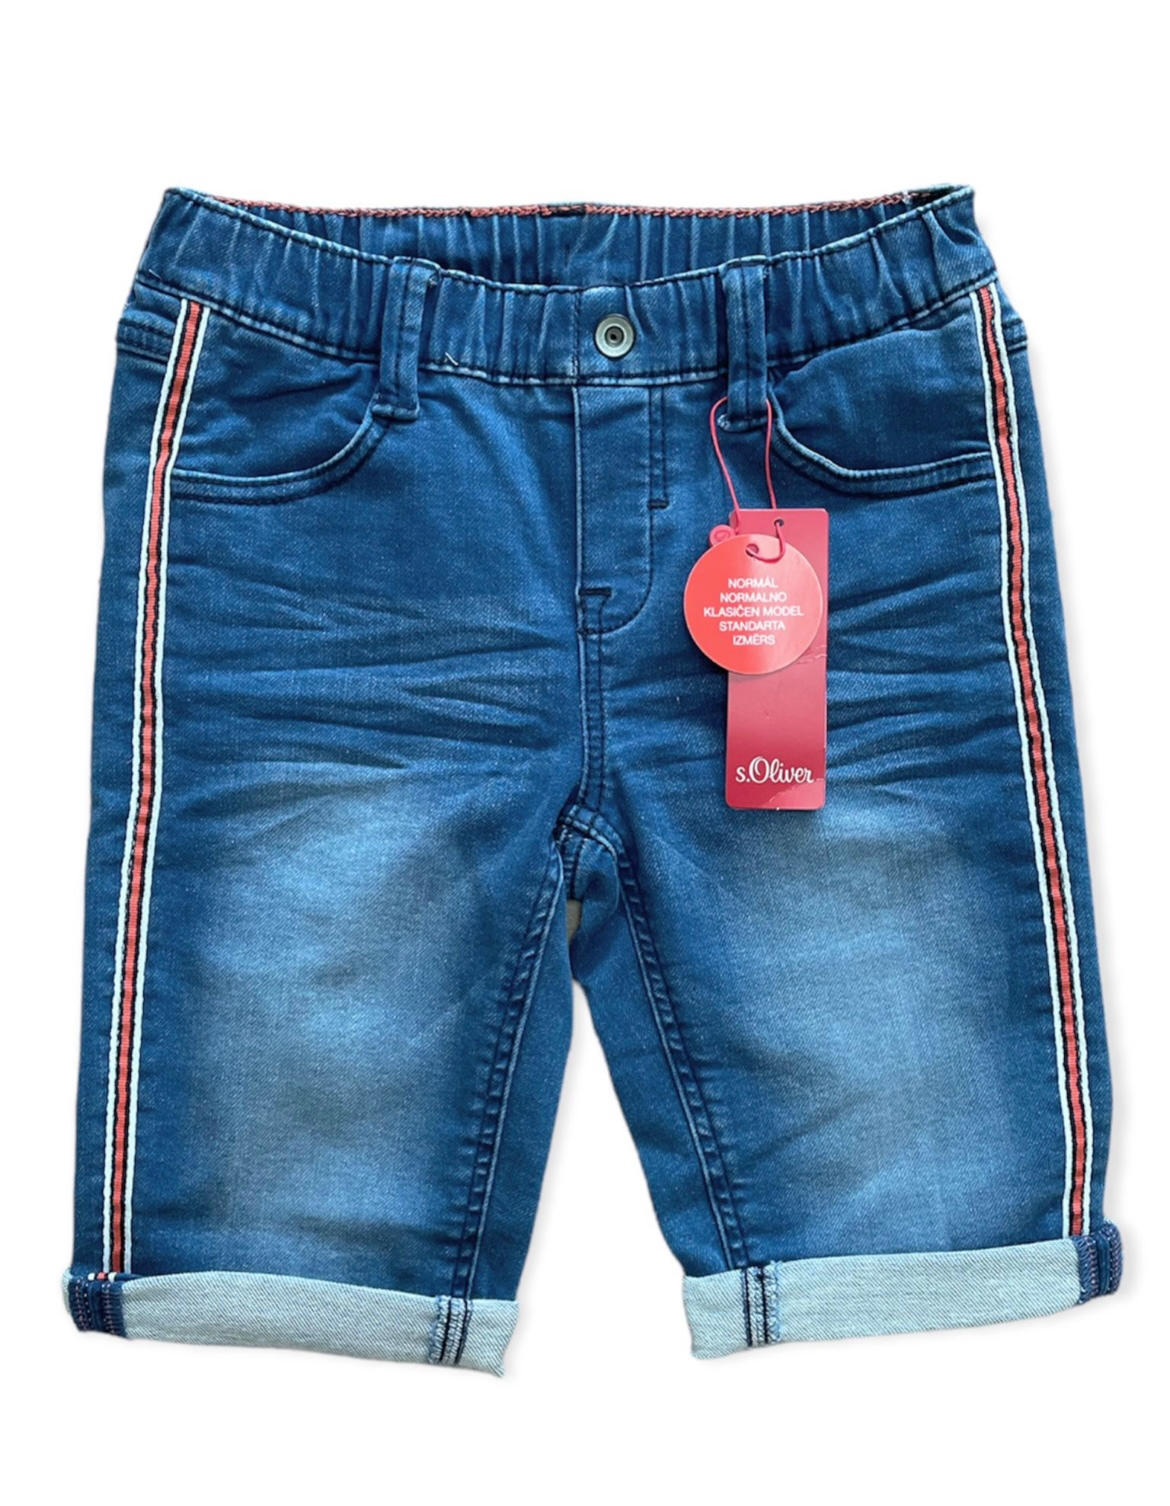 S. Oliver Jeans Shorts